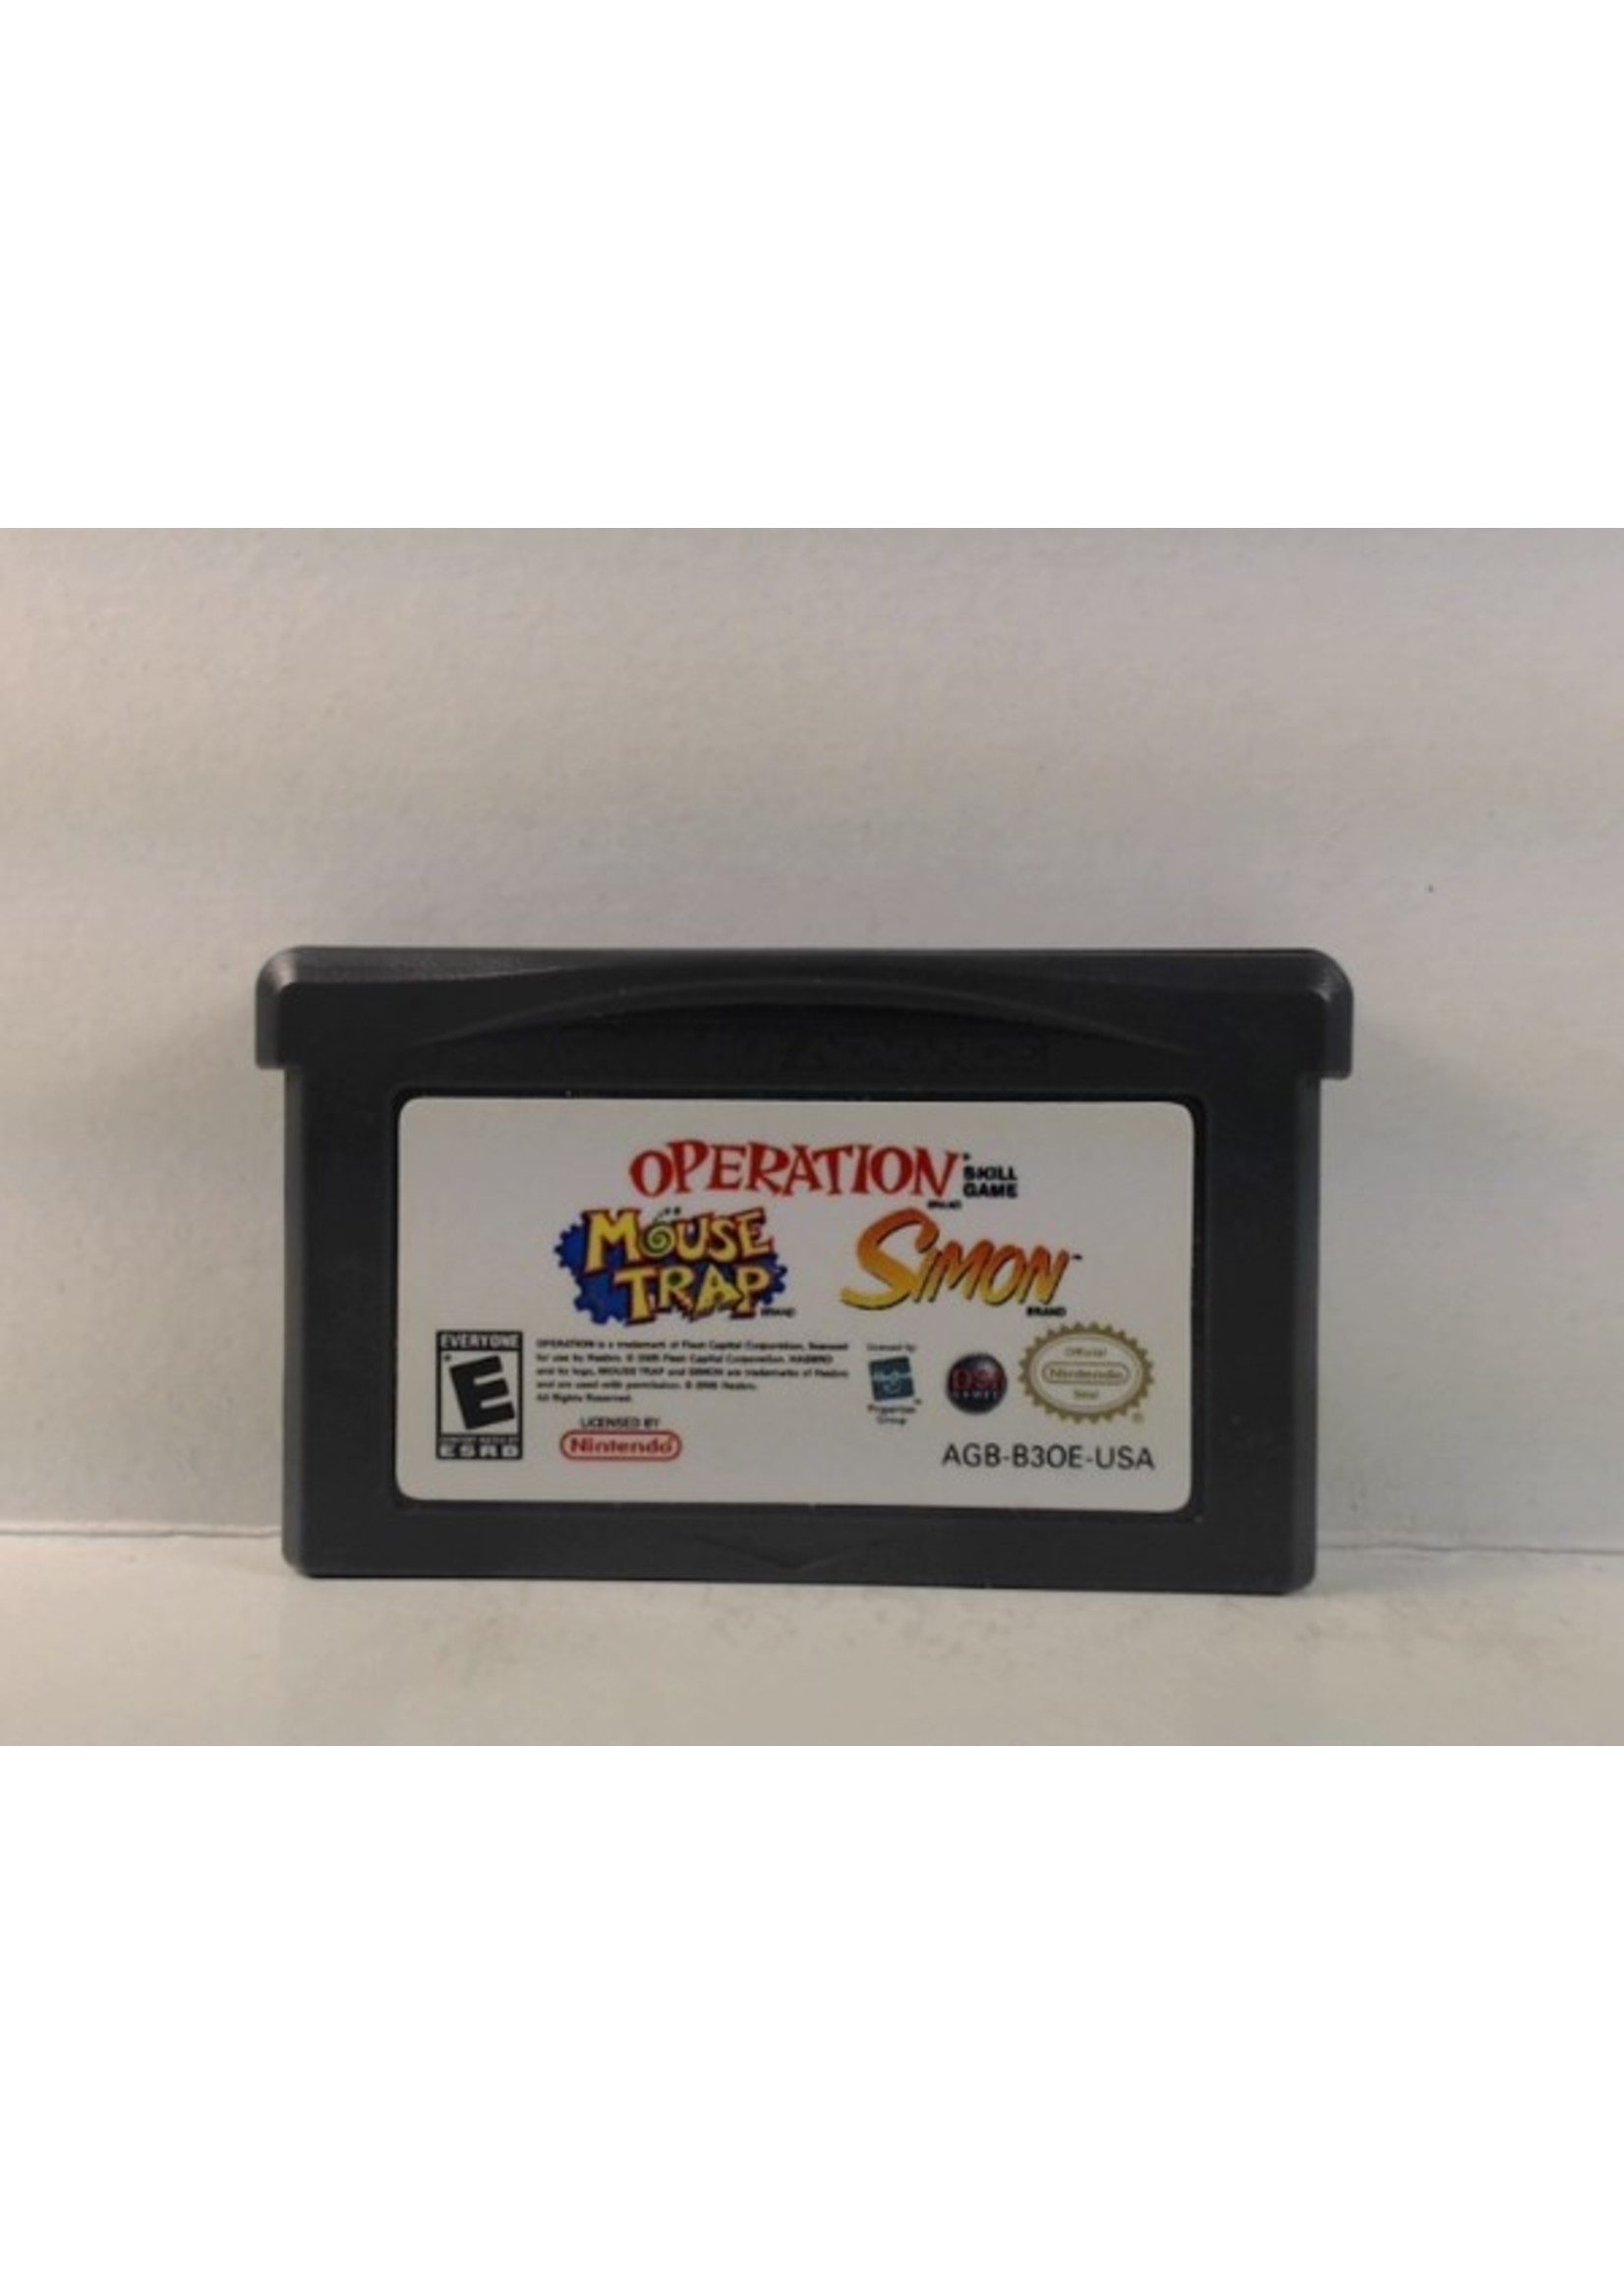 Nintendo Gameboy Advance Operation/Mouse Trap/Simon